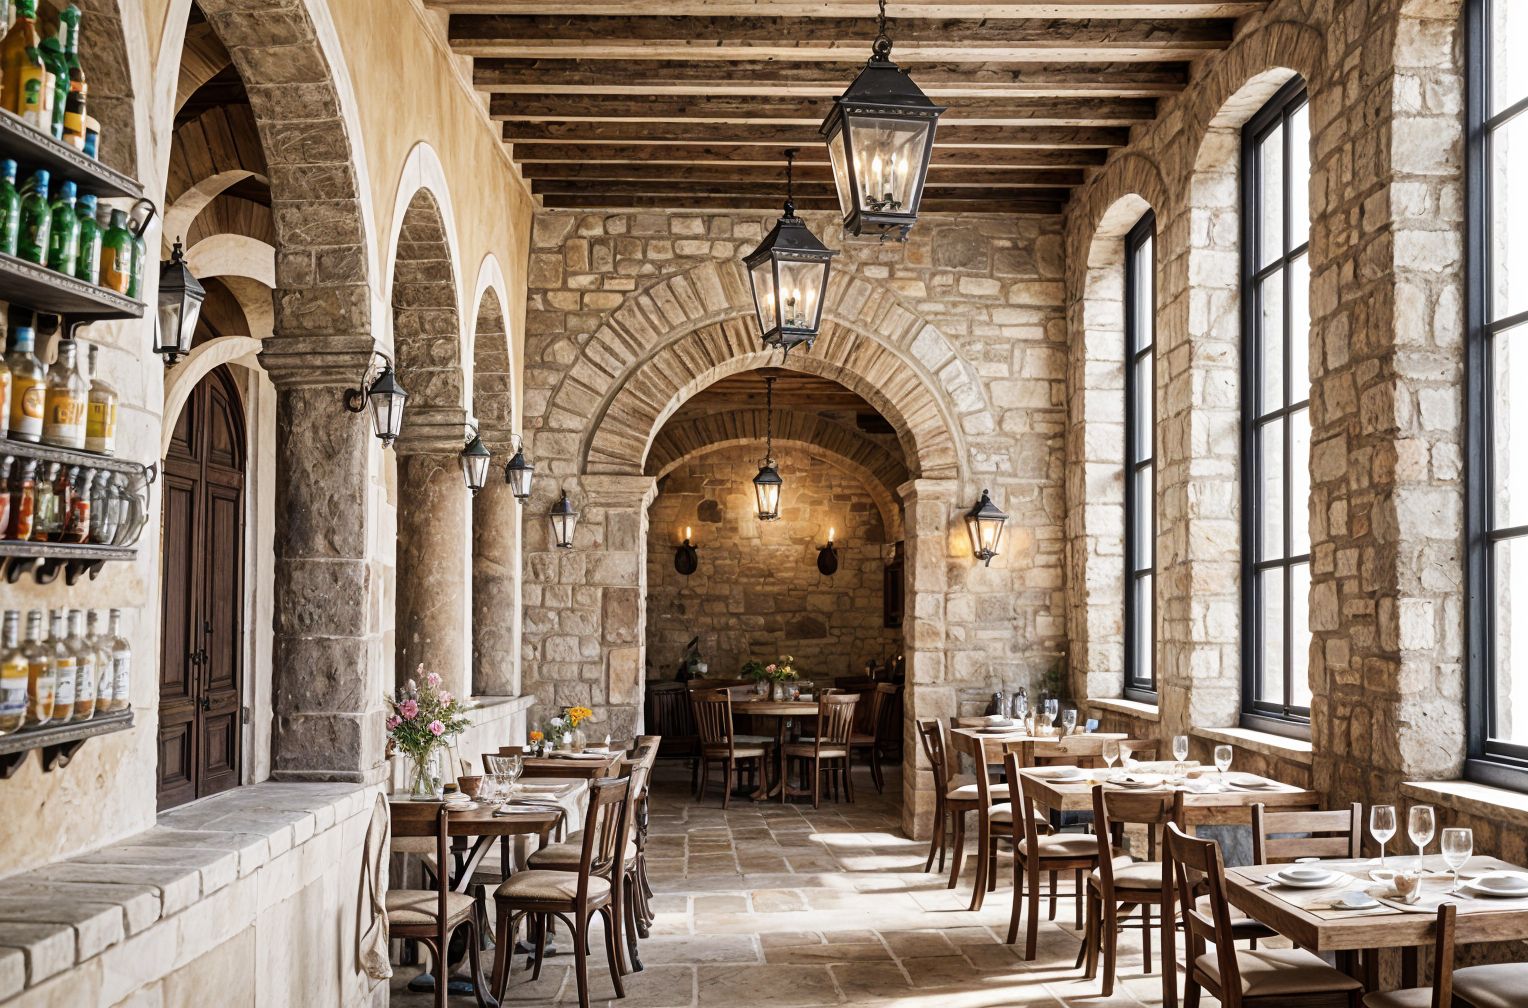 Tuscan Restaurant